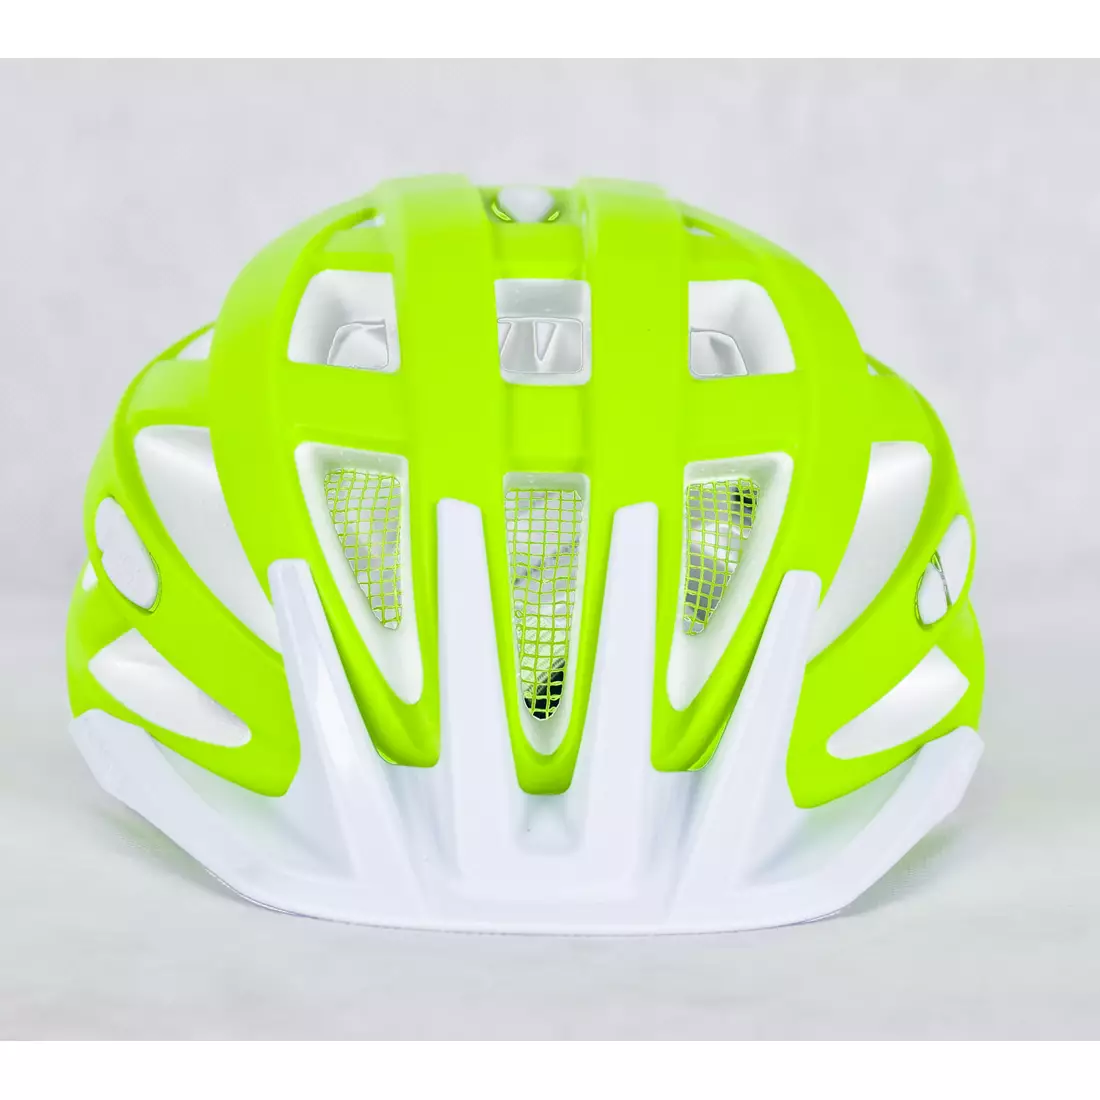 UVEX I-VO CC bicycle helmet 41042319 lime matte